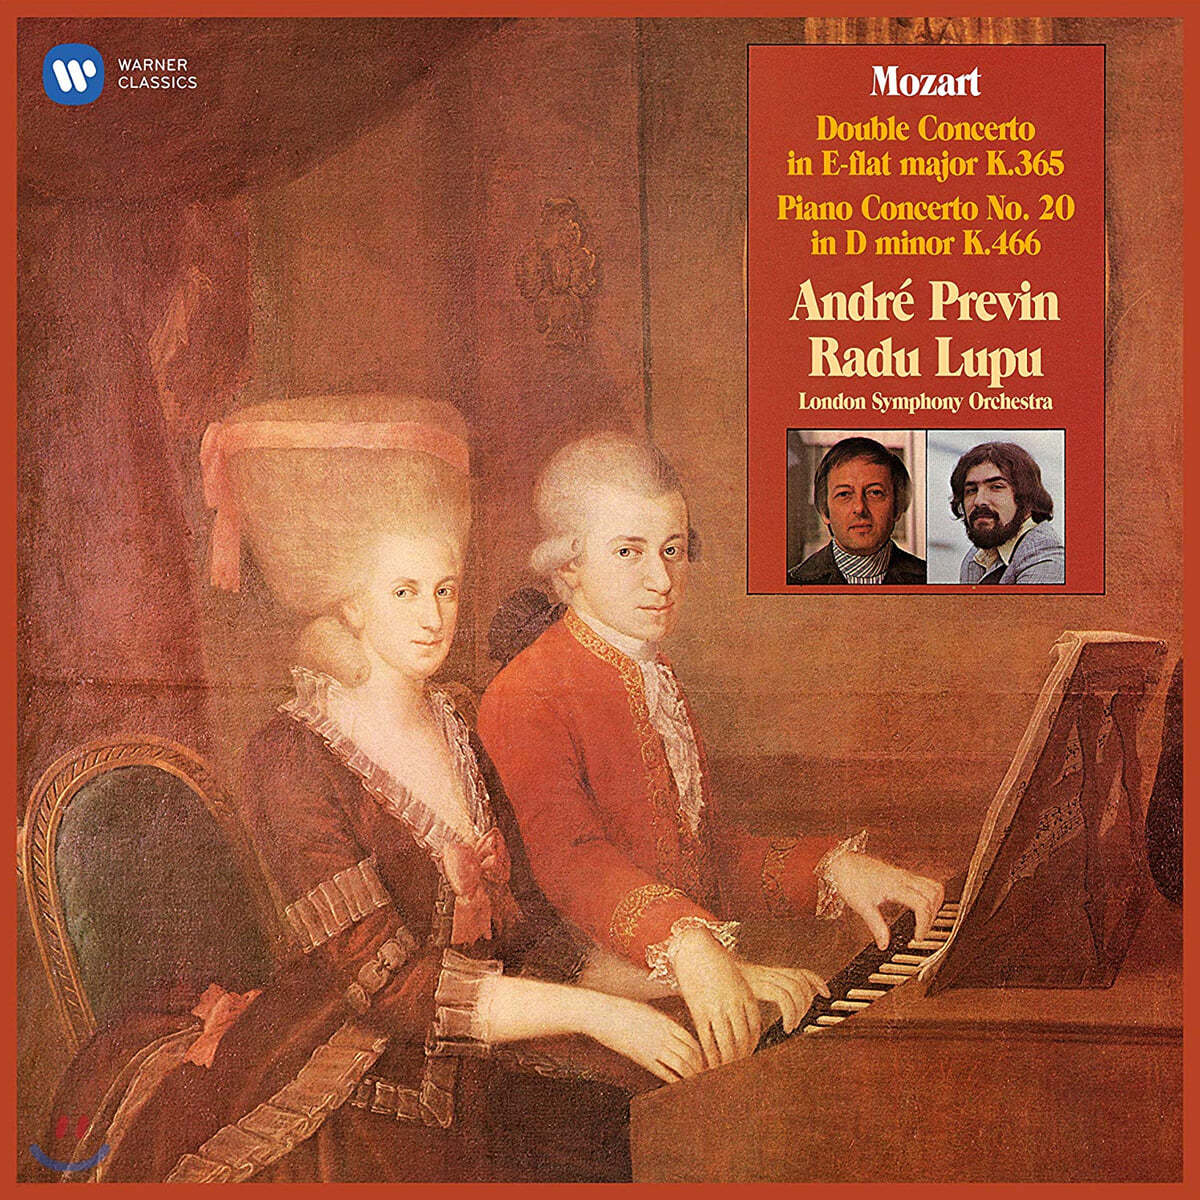 Andre Previn / Radu Lupu 모차르트: 피아노 협주곡 20번, 두 개의 피아노를 위한 협주곡 